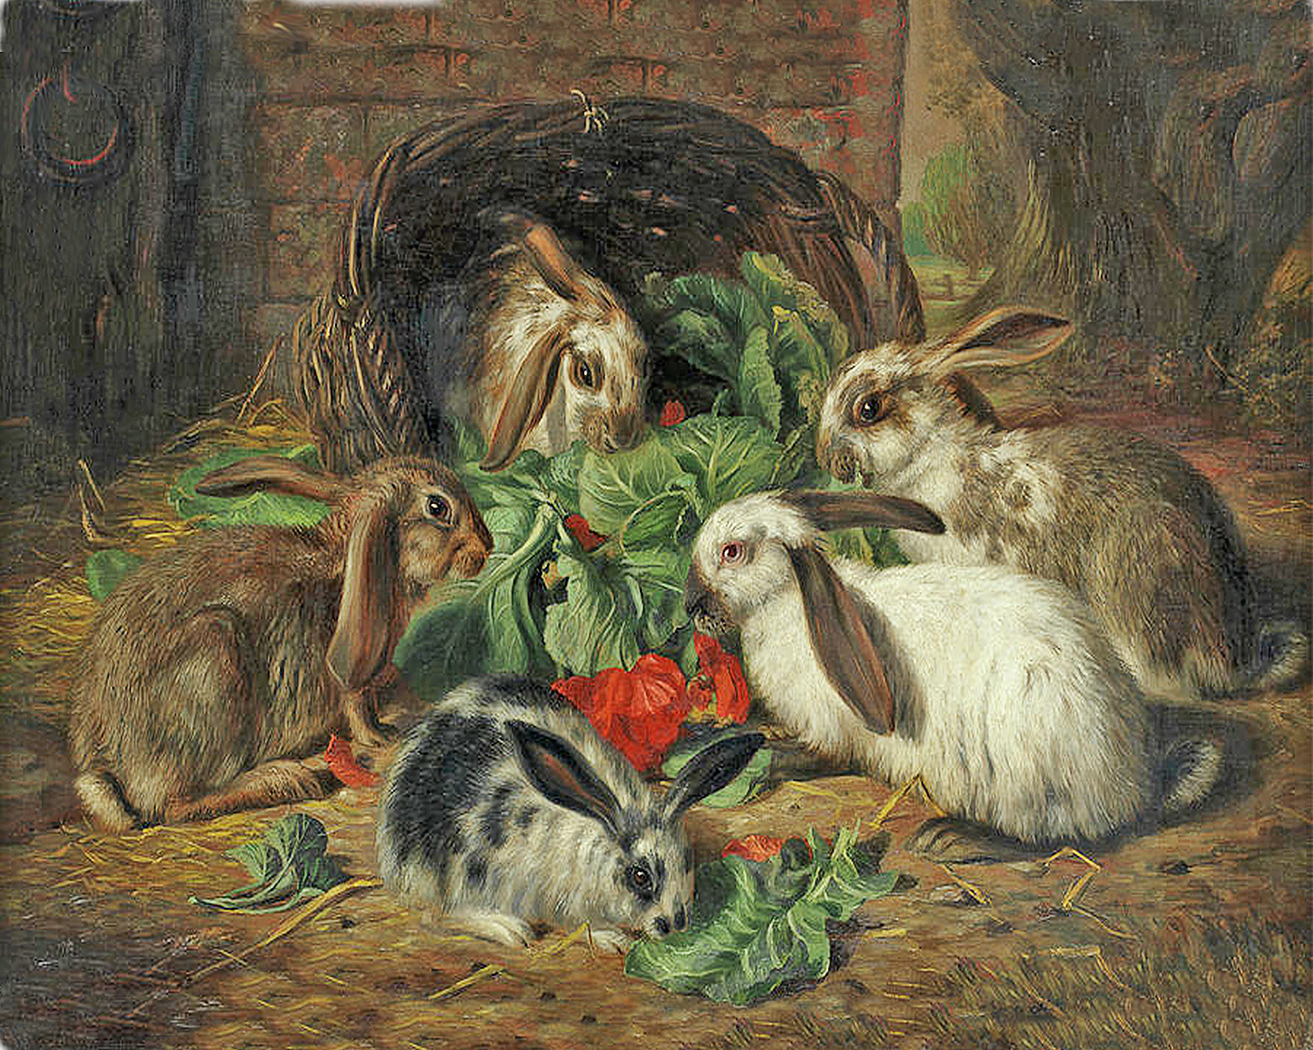 Farm/Pastoral Farm Rabbits Meal Framed Oil Painting Print on Canvas